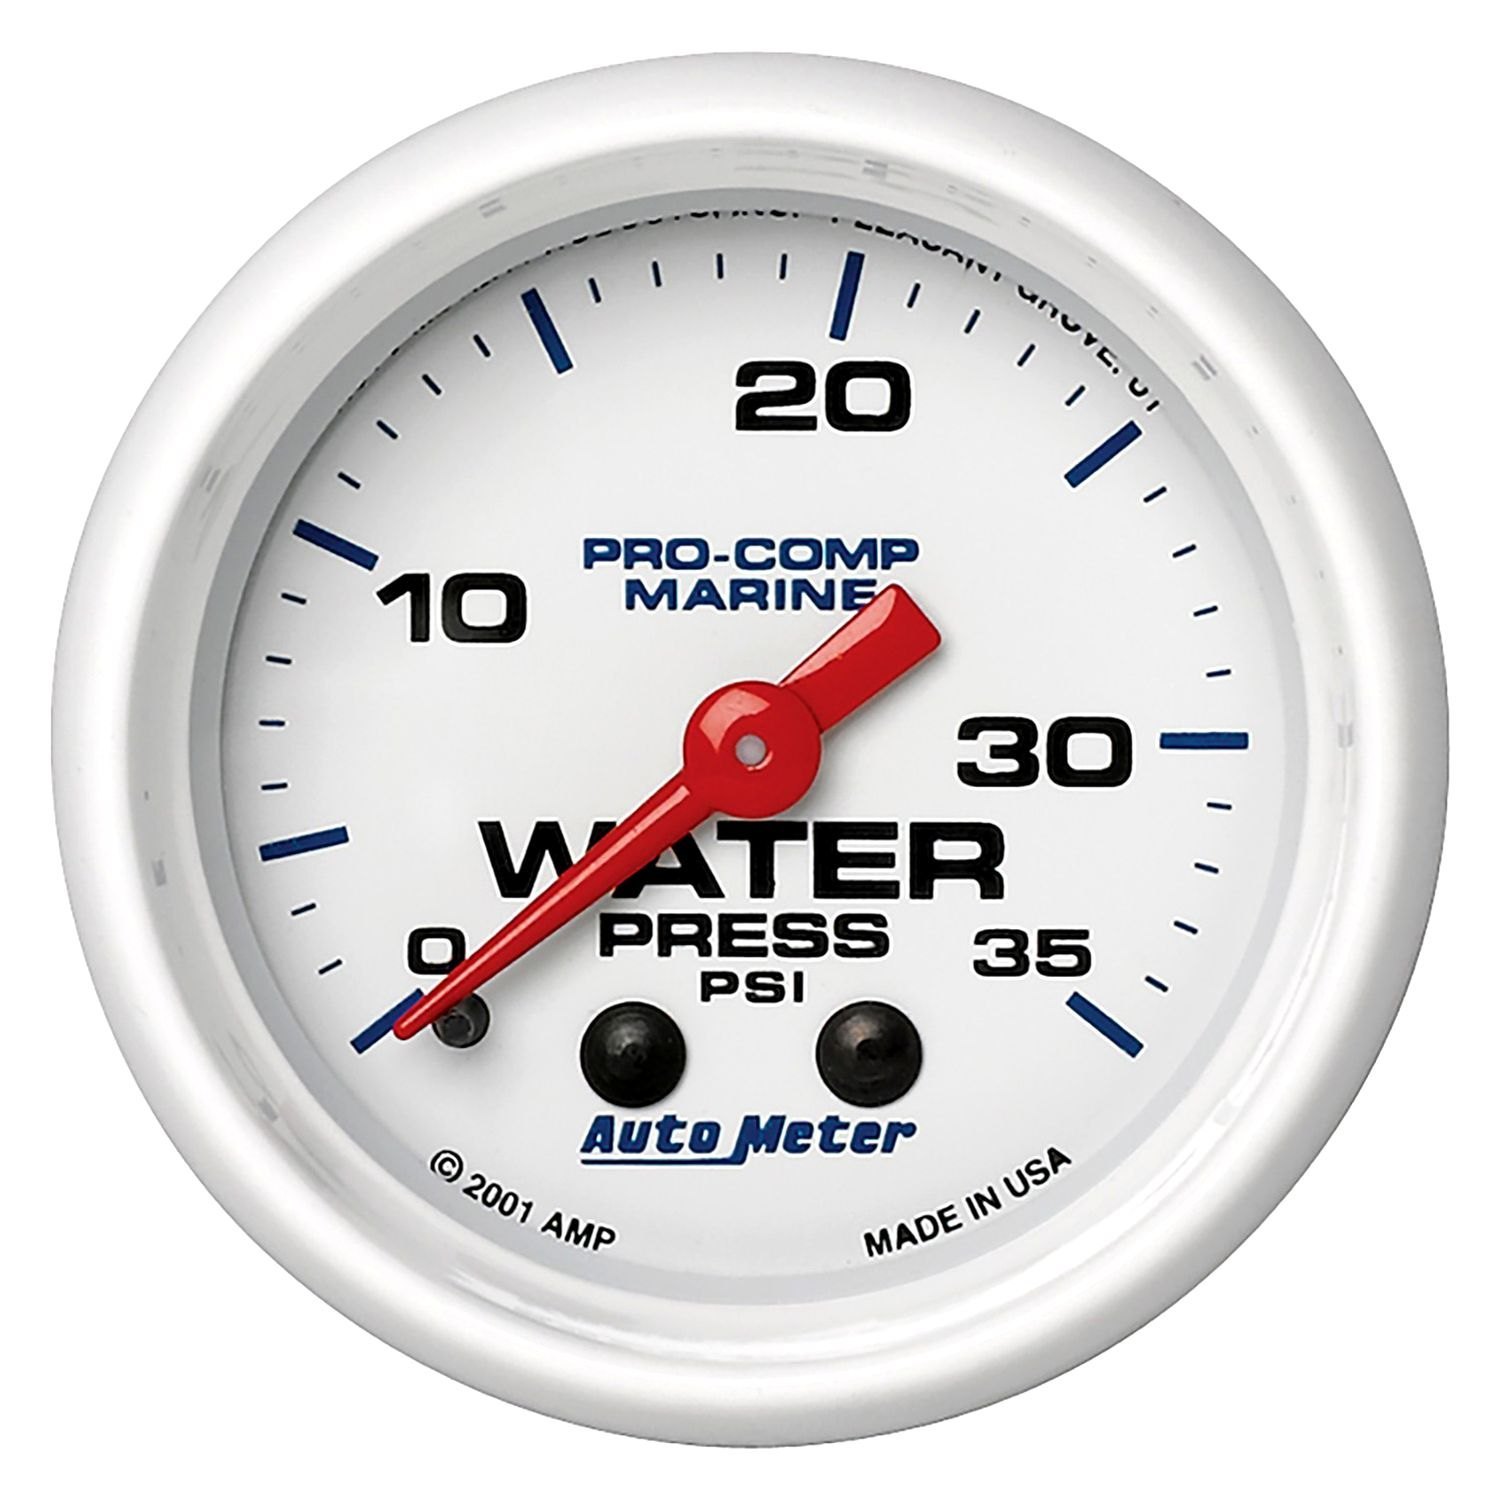 35 psi. Water Pressure. Pressure Meter. Auto Meter электронный. Airline Pressure воды.